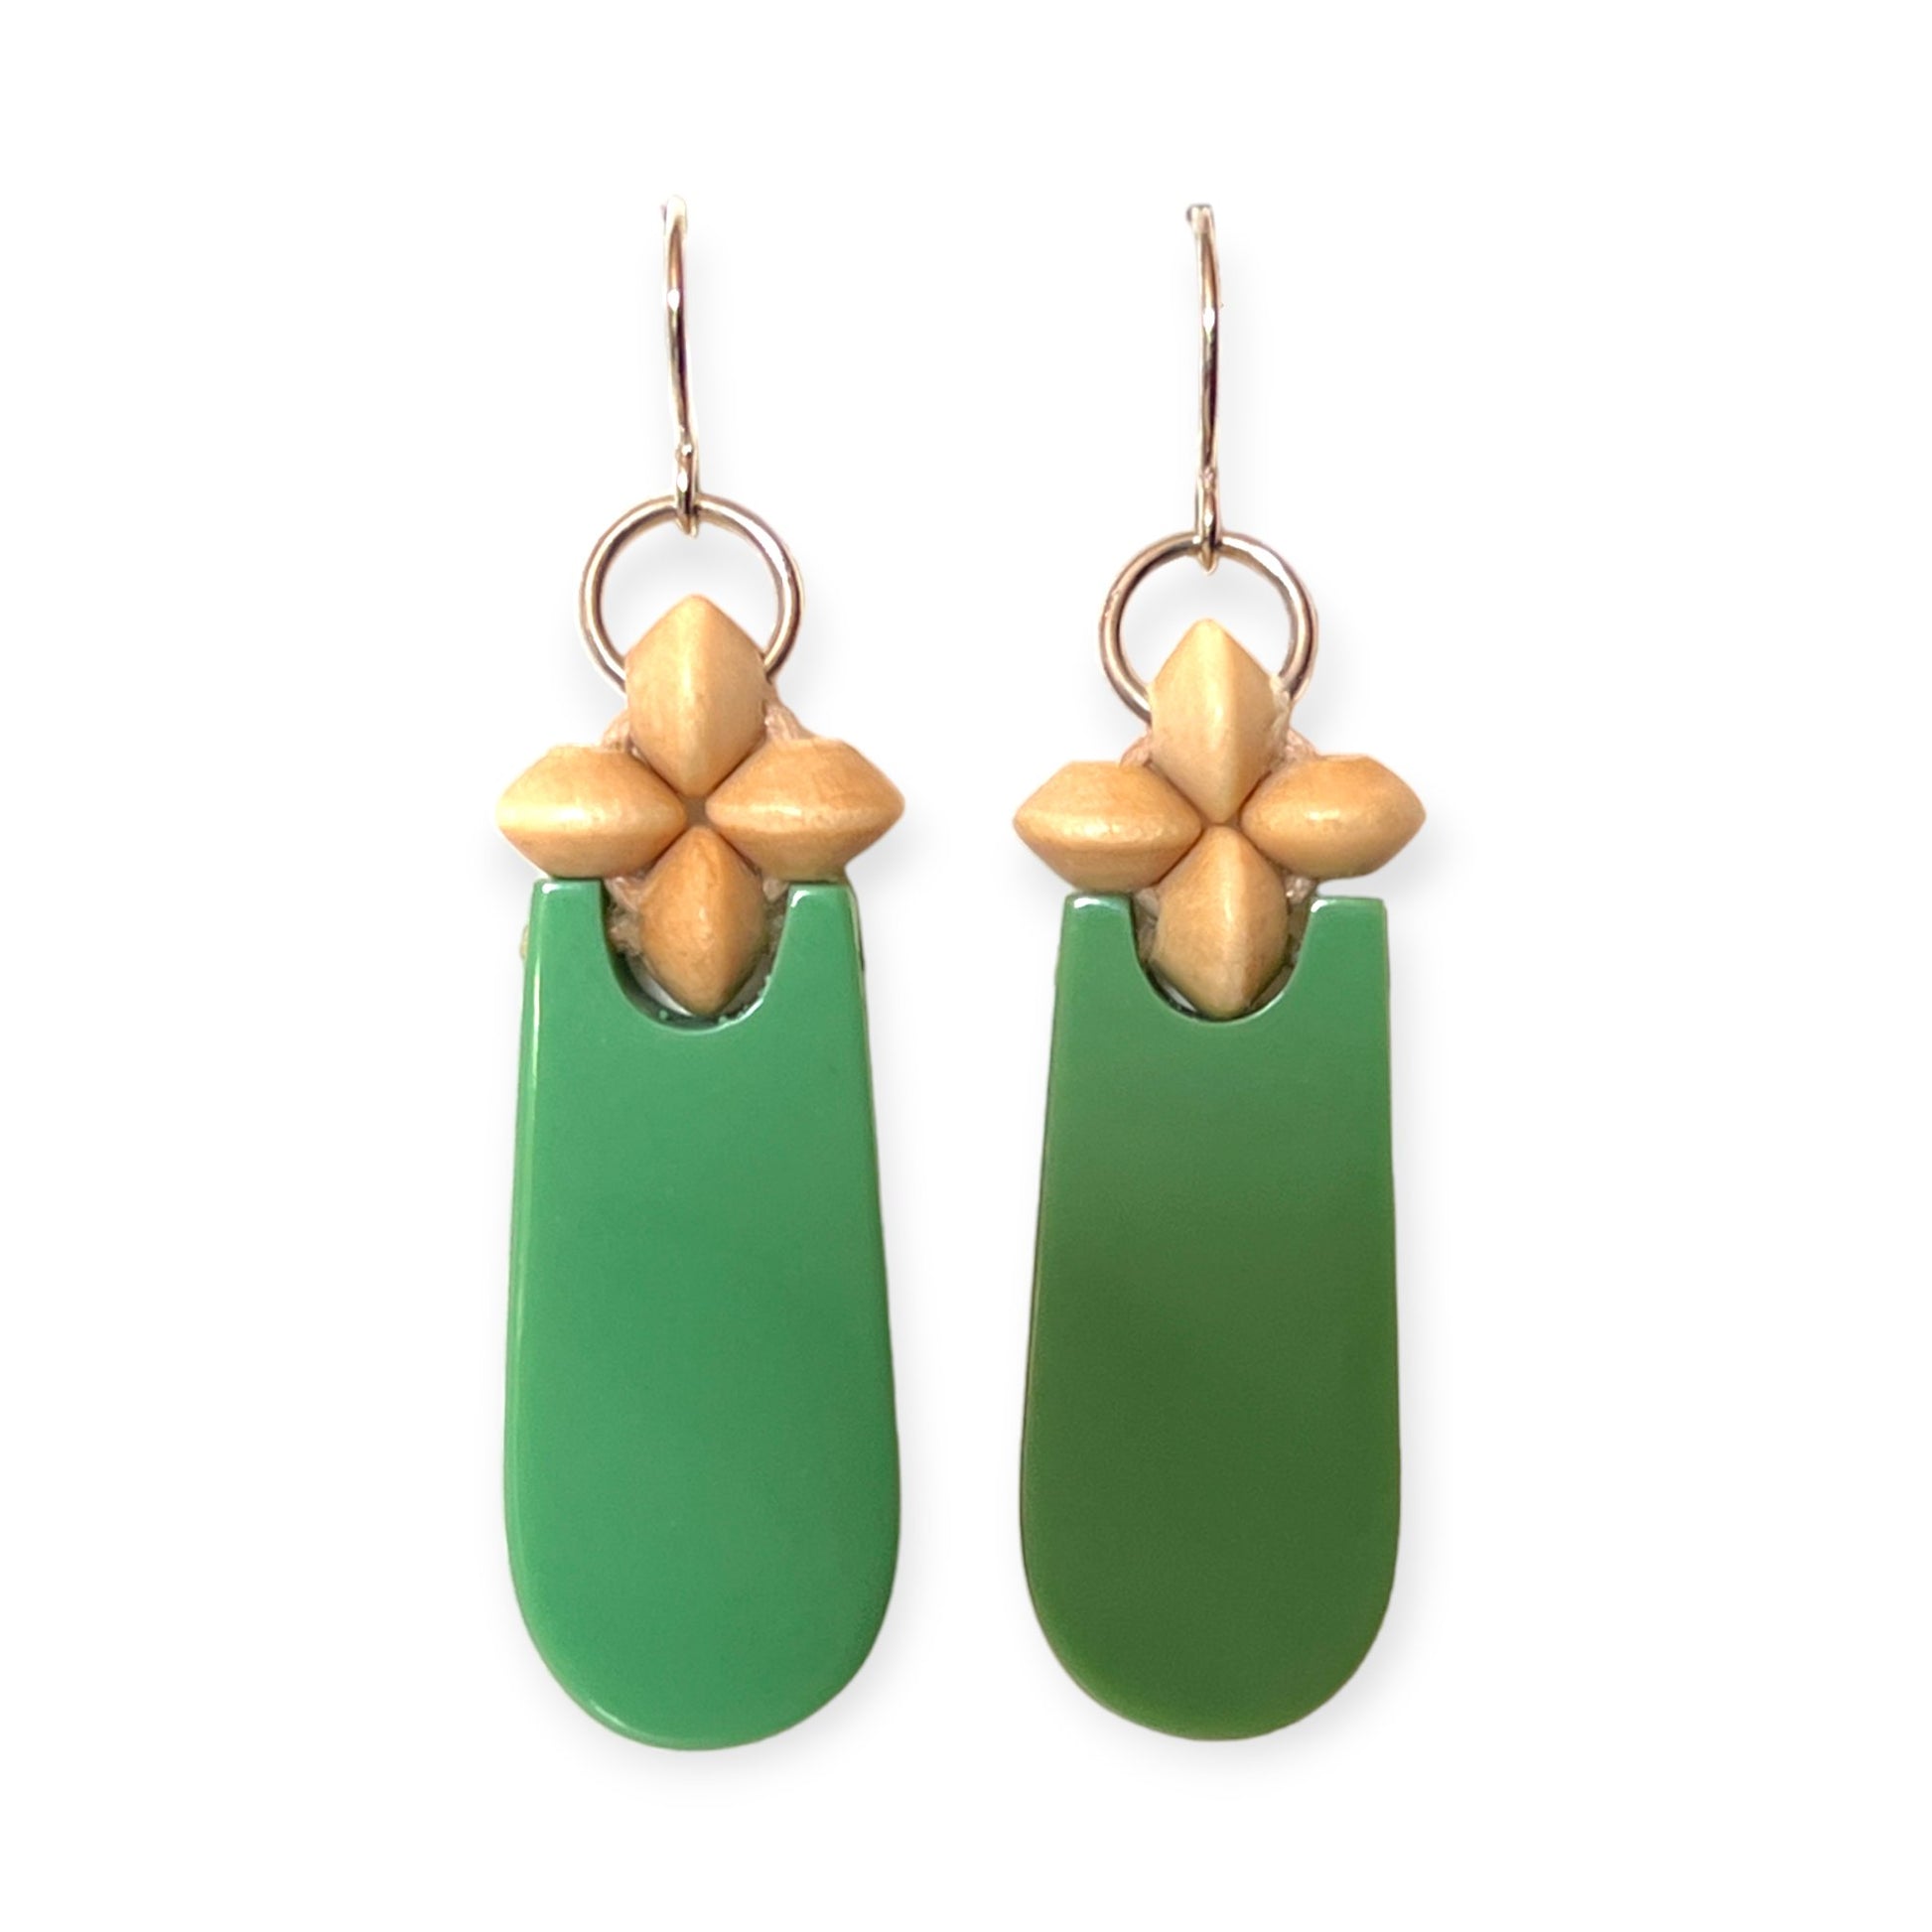 Green wooden modern drop earrings - Sundara Joon